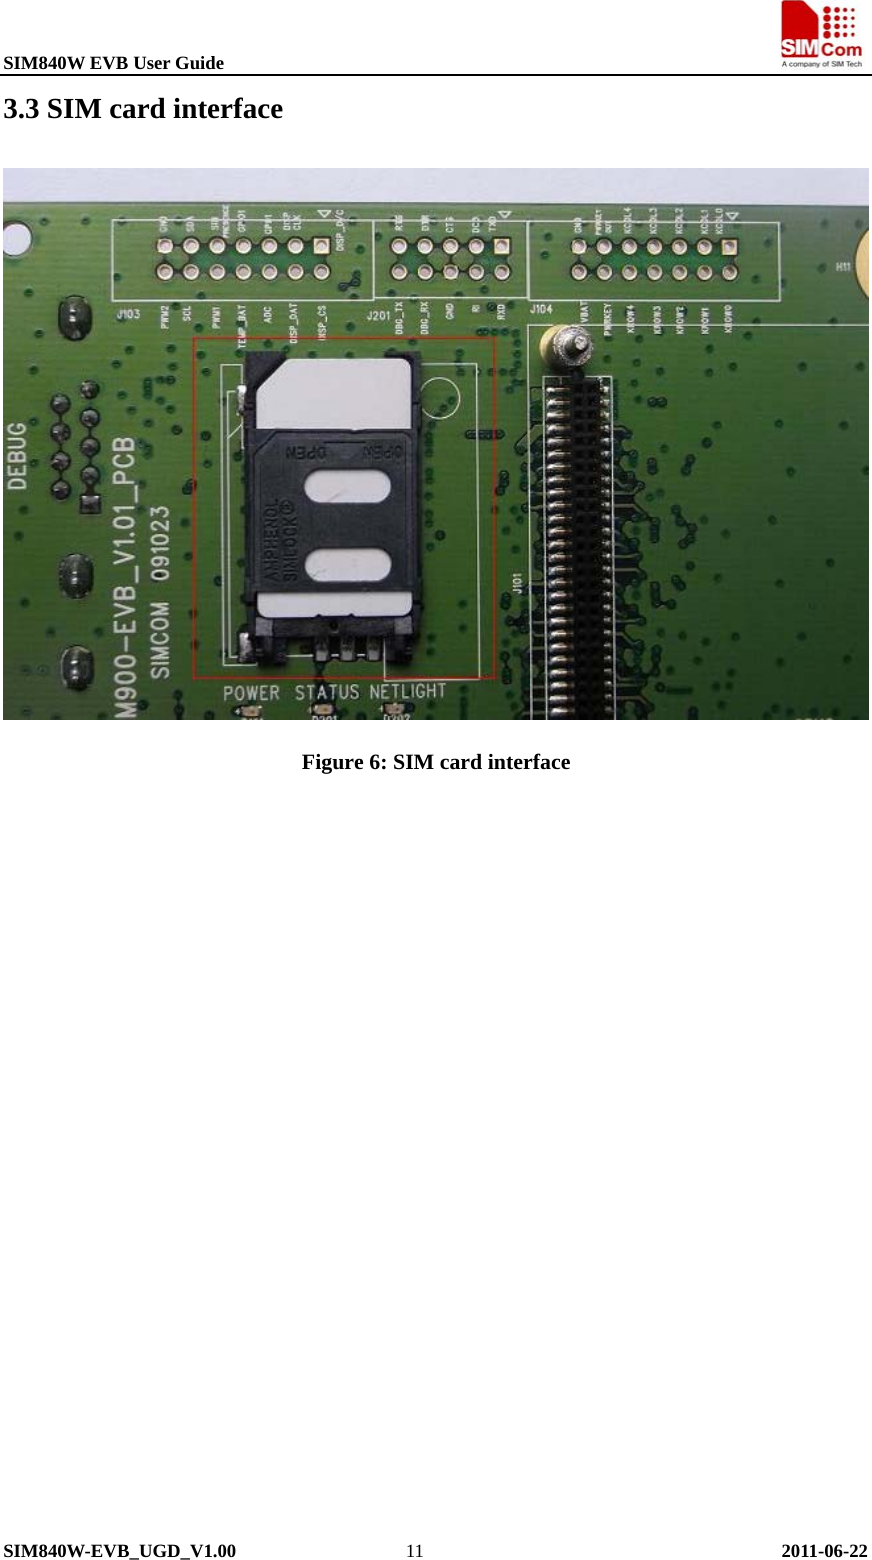 SIM840W EVB User Guide                                                             SIM840W-EVB_UGD_V1.00                  11                                      2011-06-22 3.3 SIM card interface  Figure 6: SIM card interface  